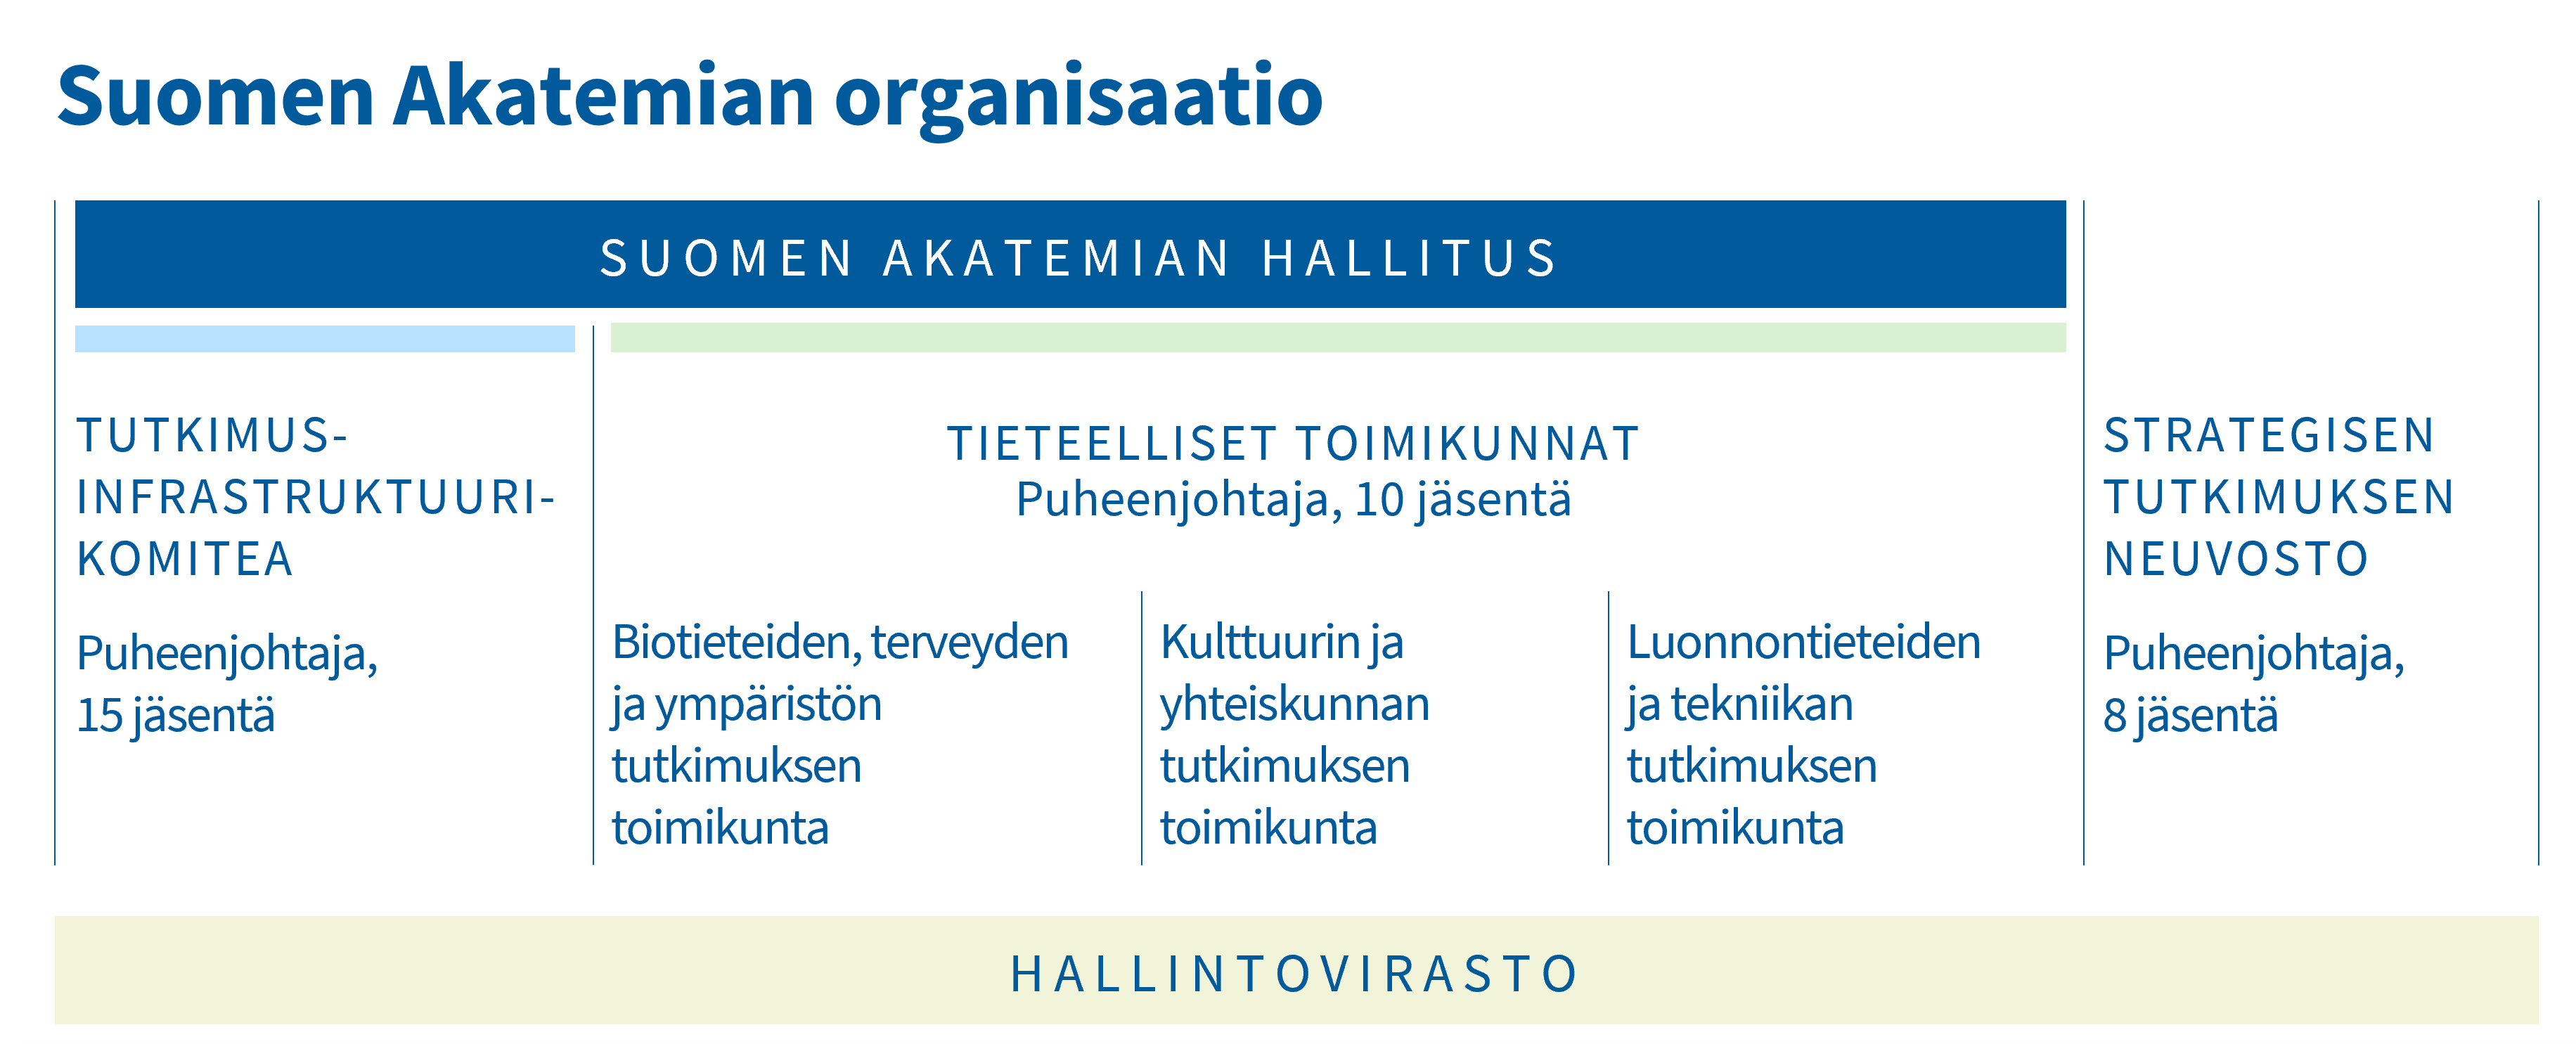 Suomen Akatemian organisaatio.png